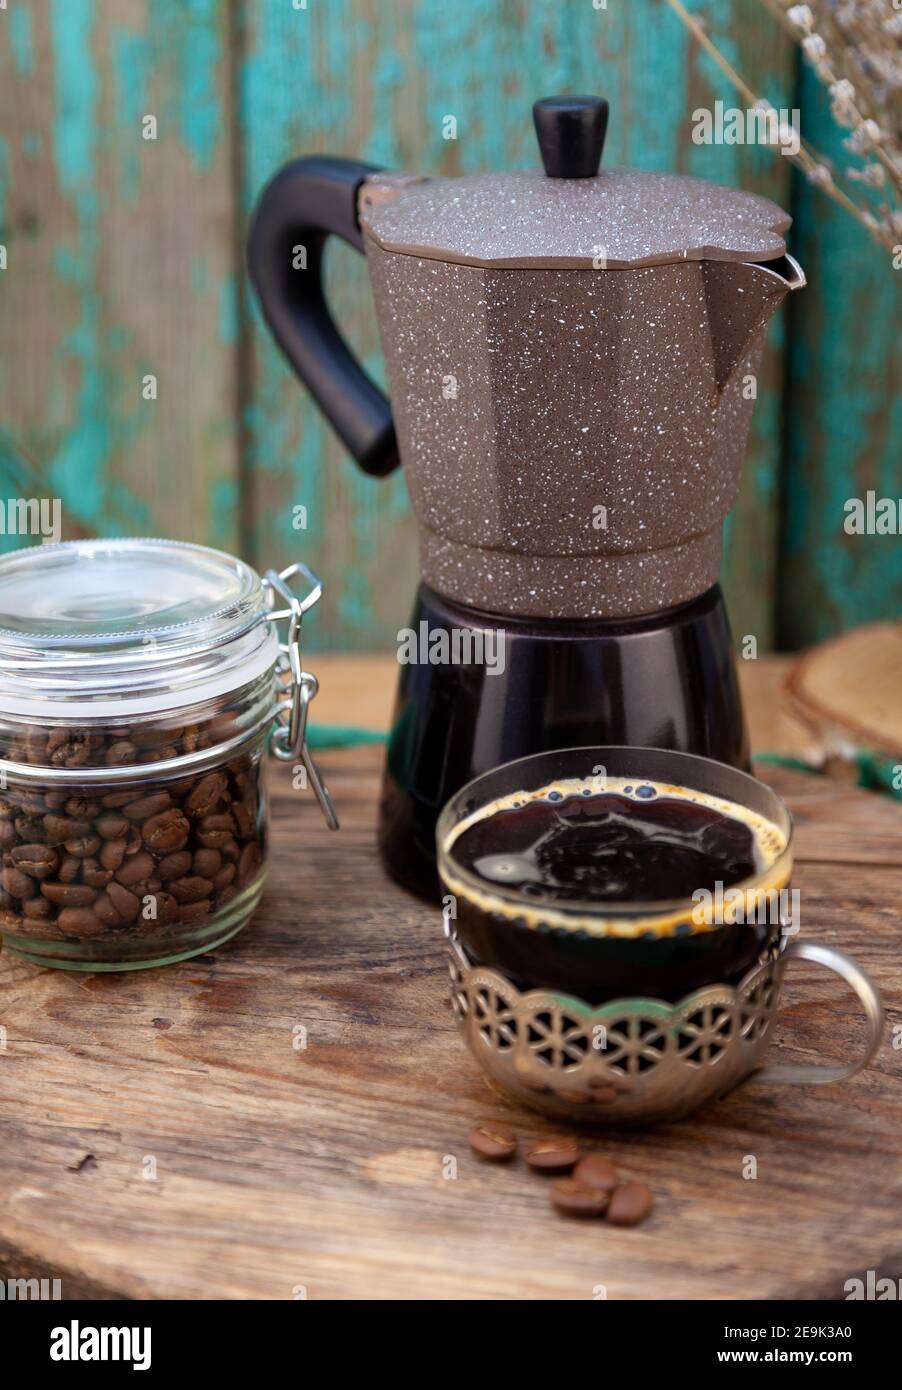 https://c8.alamy.com/compes/2e9k3a0/cafetera-para-preparar-cafe-en-la-estufa-taza-de-cafe-granos-en-un-tarro-la-vida-de-la-manana-2e9k3a0.jpg